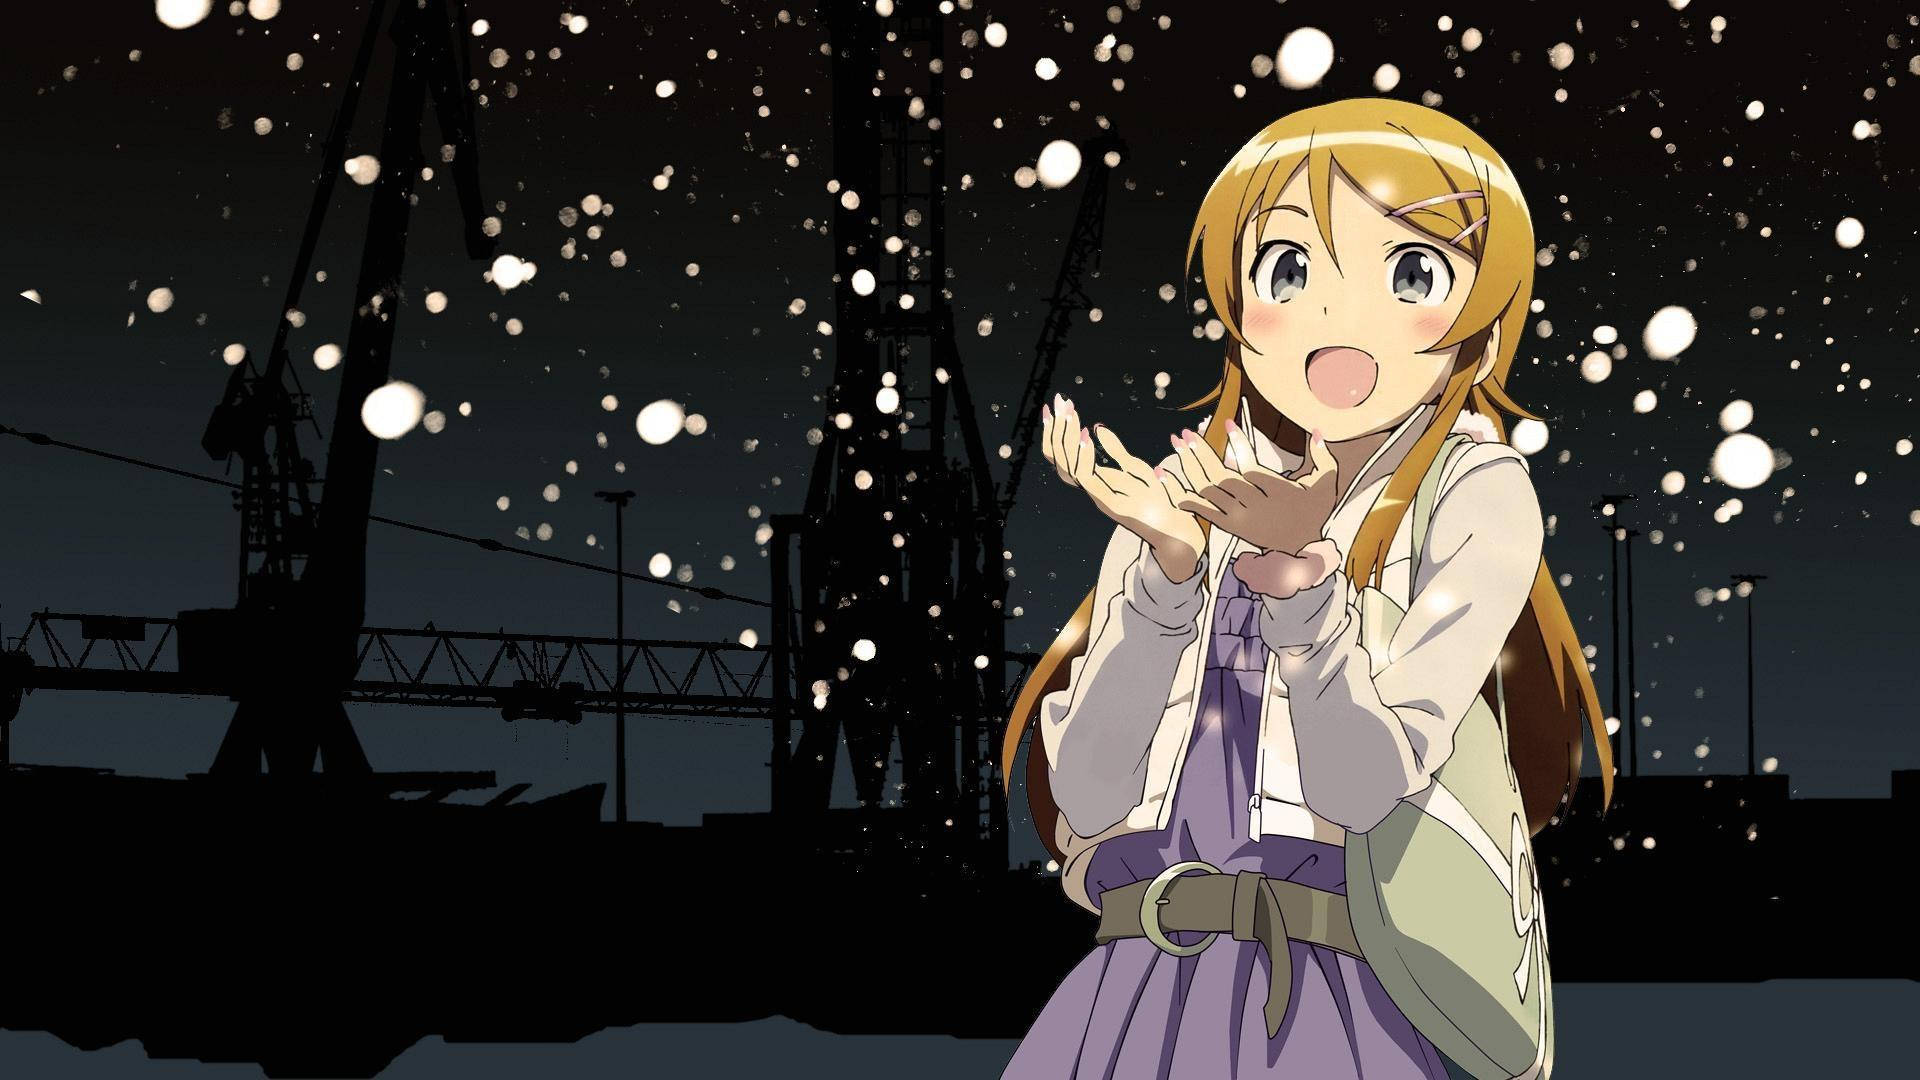 Kawaii Hd Anime Girl Catching Snow